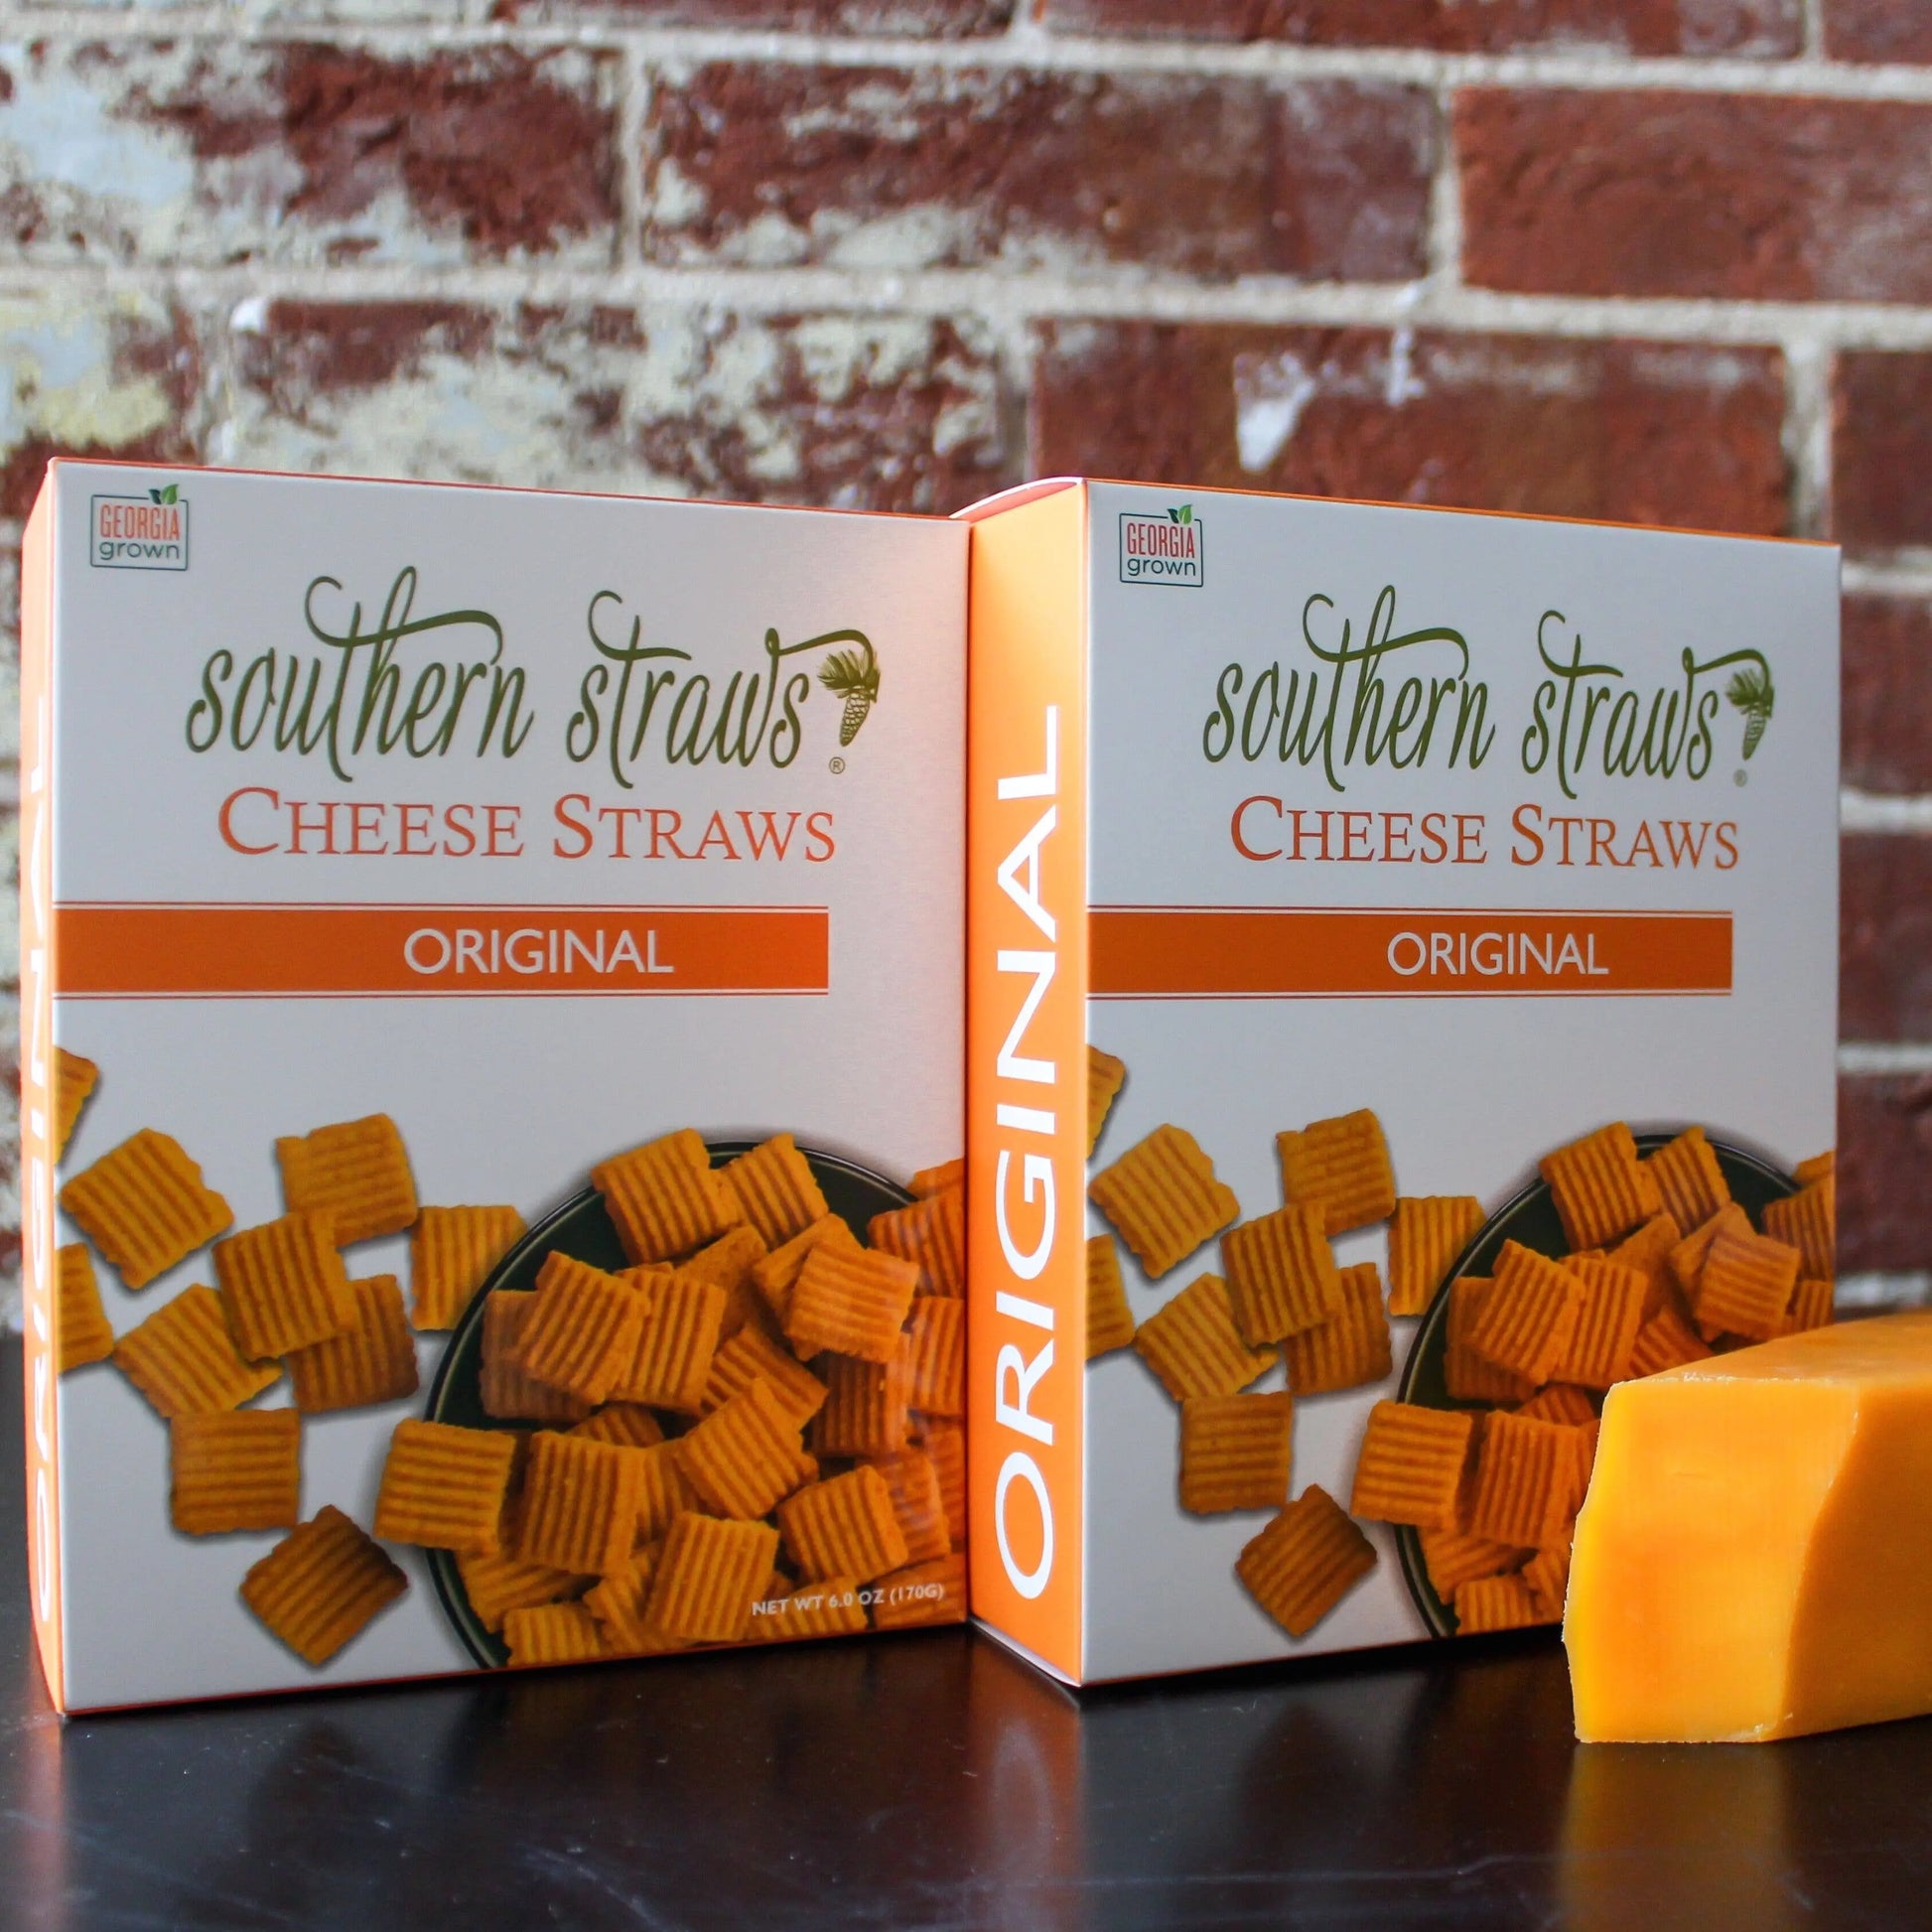 Southern Straws Cheese Straws 6 oz Box - Original Southern Straws Cheese Straws